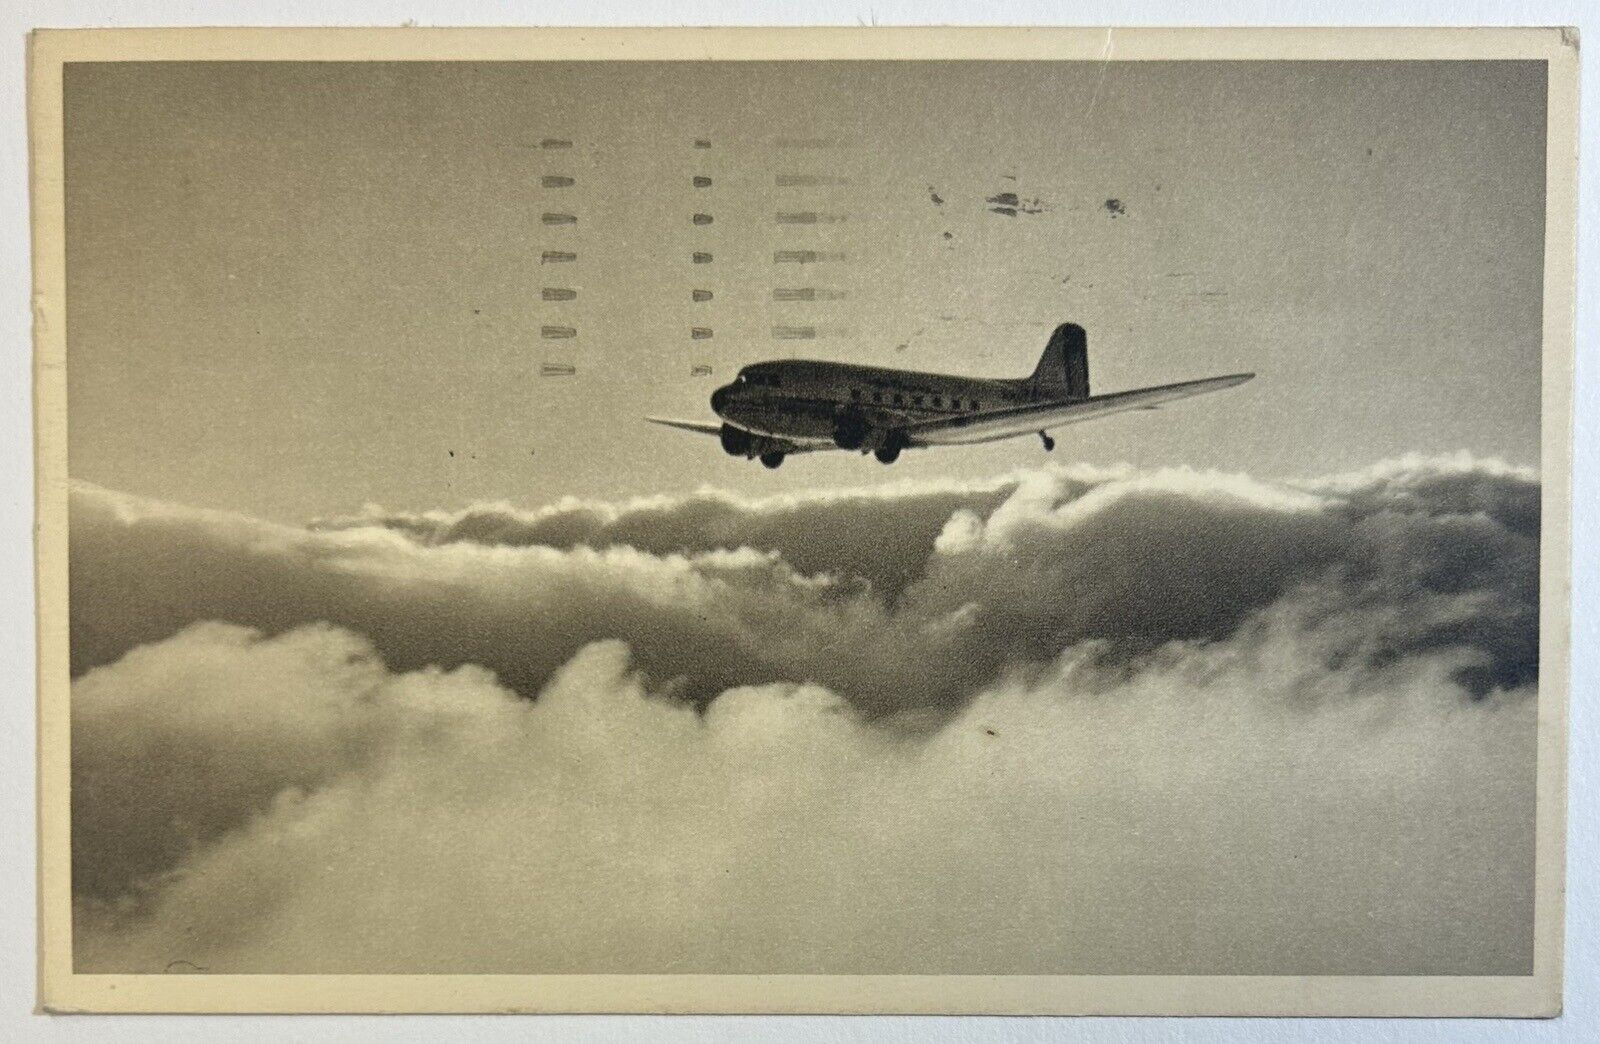 American Airlines Flagship Fleet Postcard, Posted 1941 Washington, D.C.